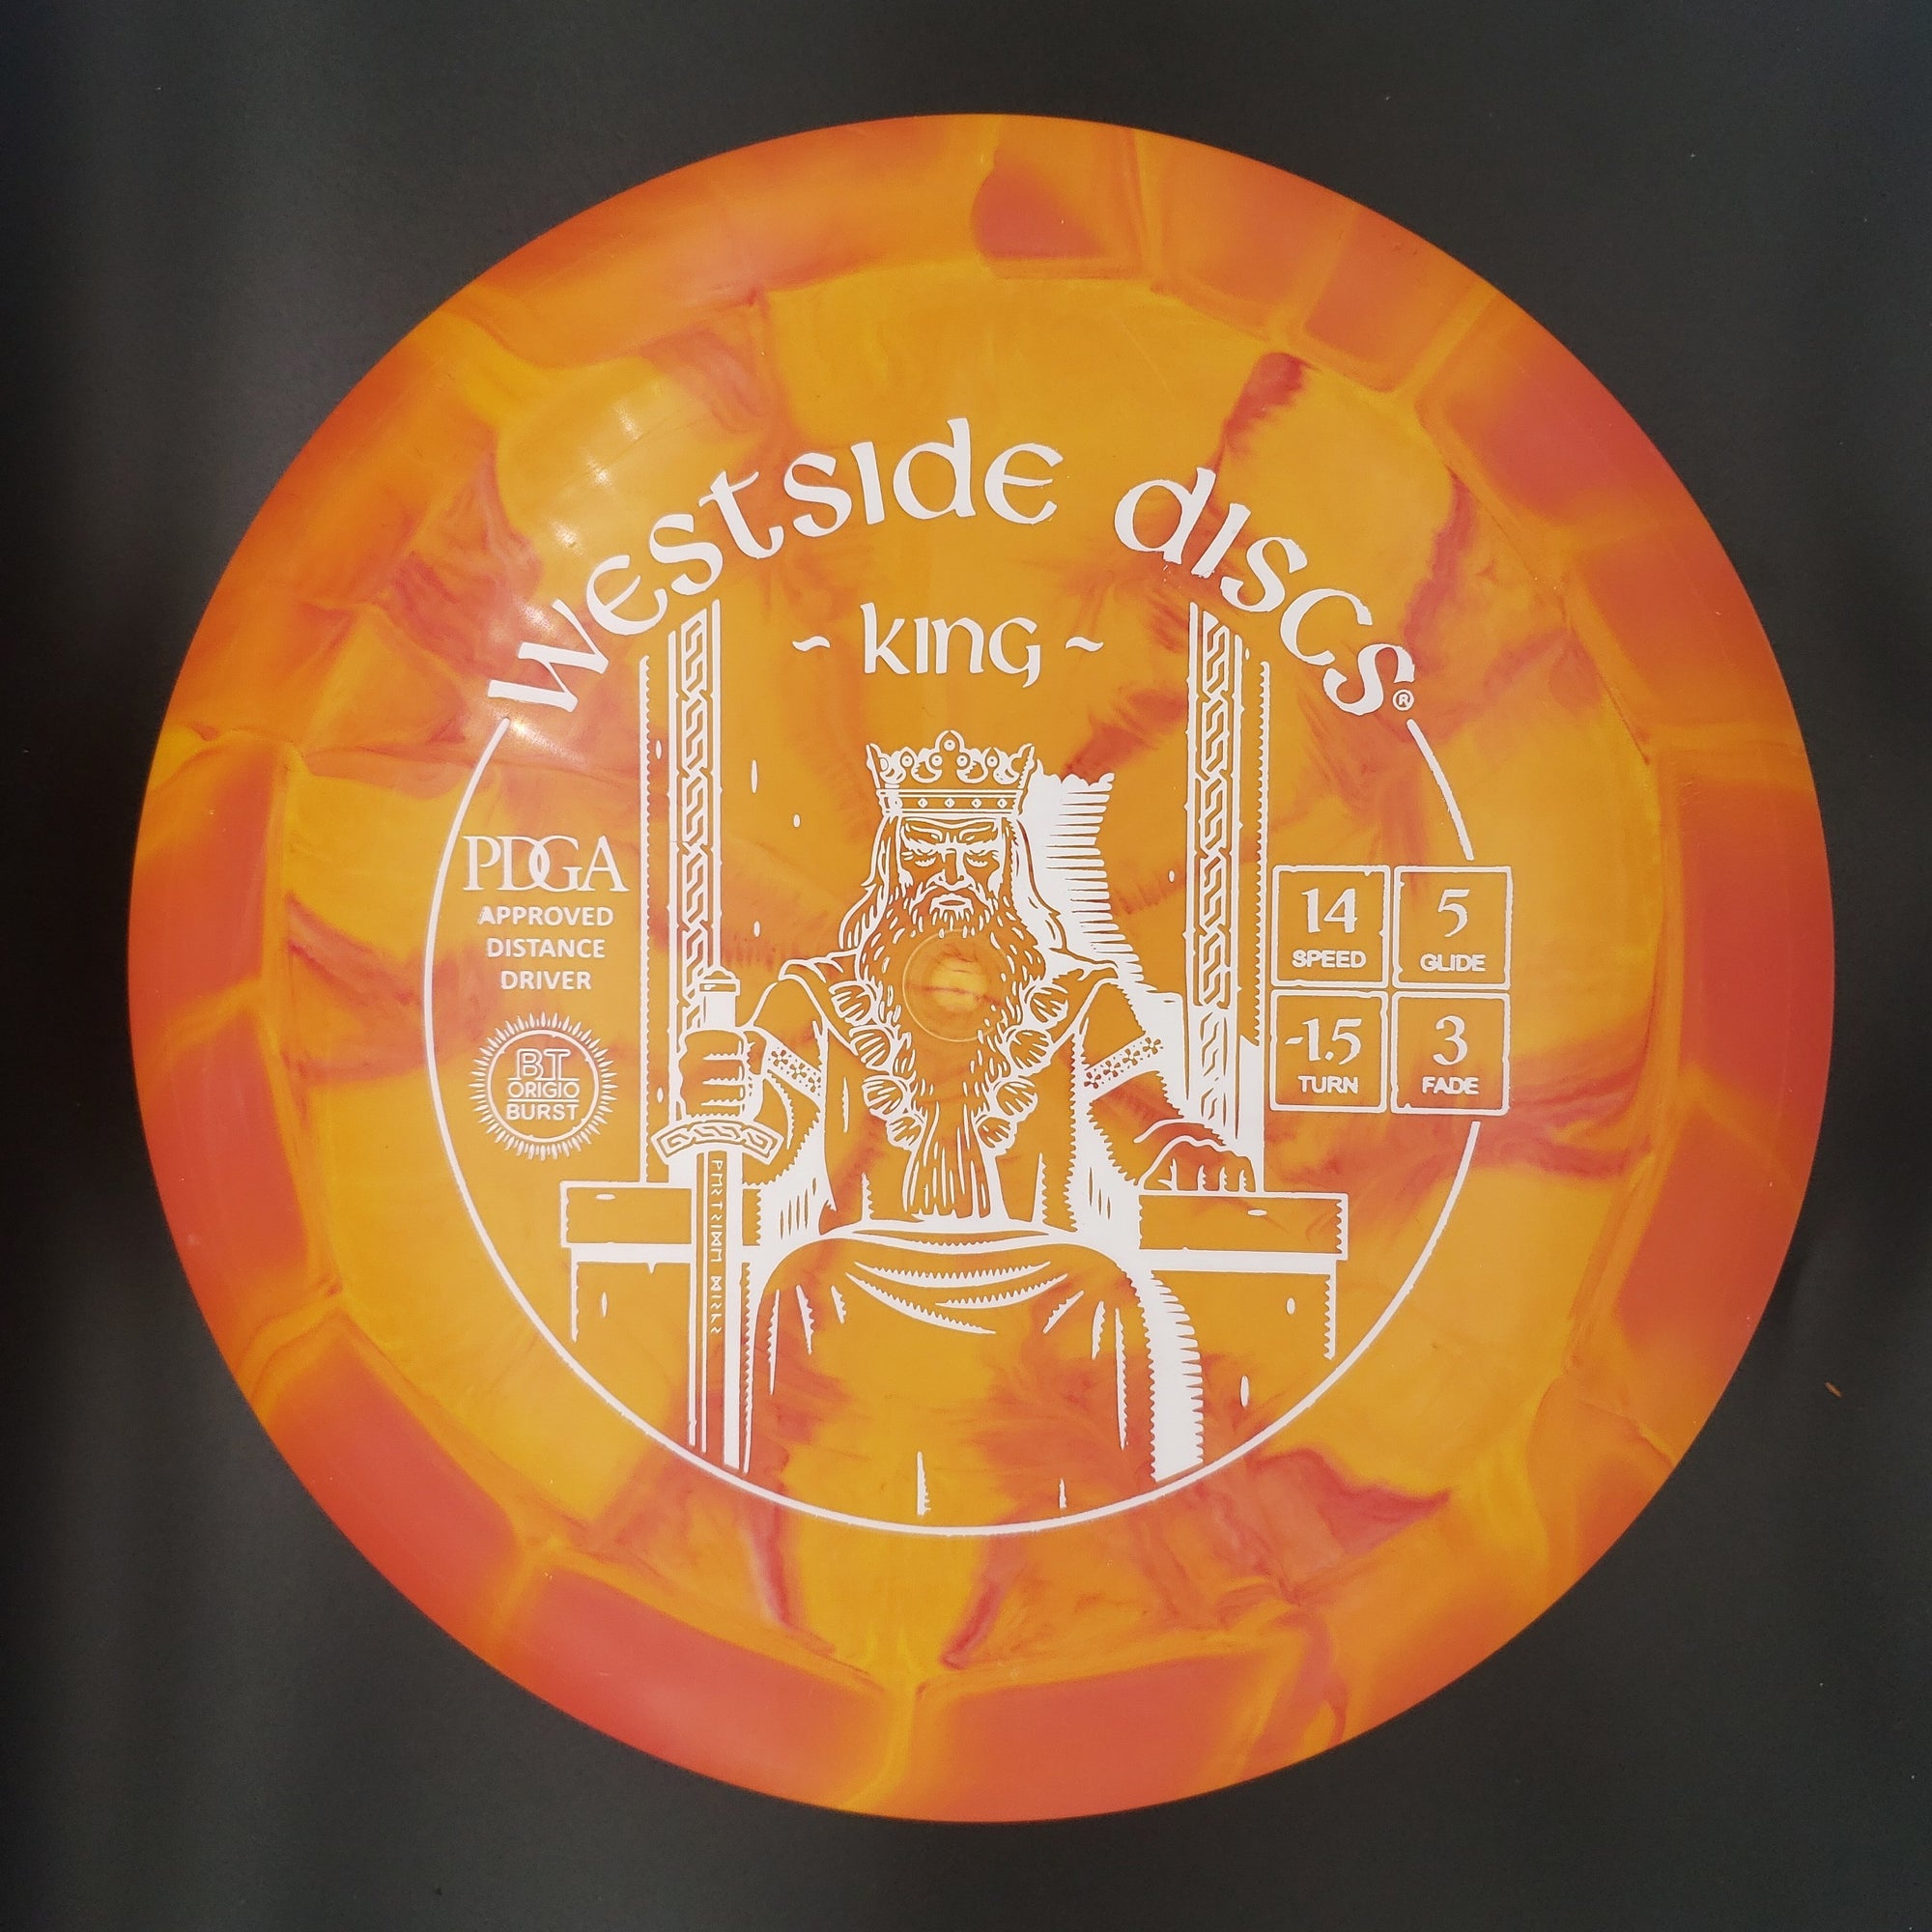 Westside Discs Distance Driver Orange White Stamp 173g 1 King, Origio Burst Plastic